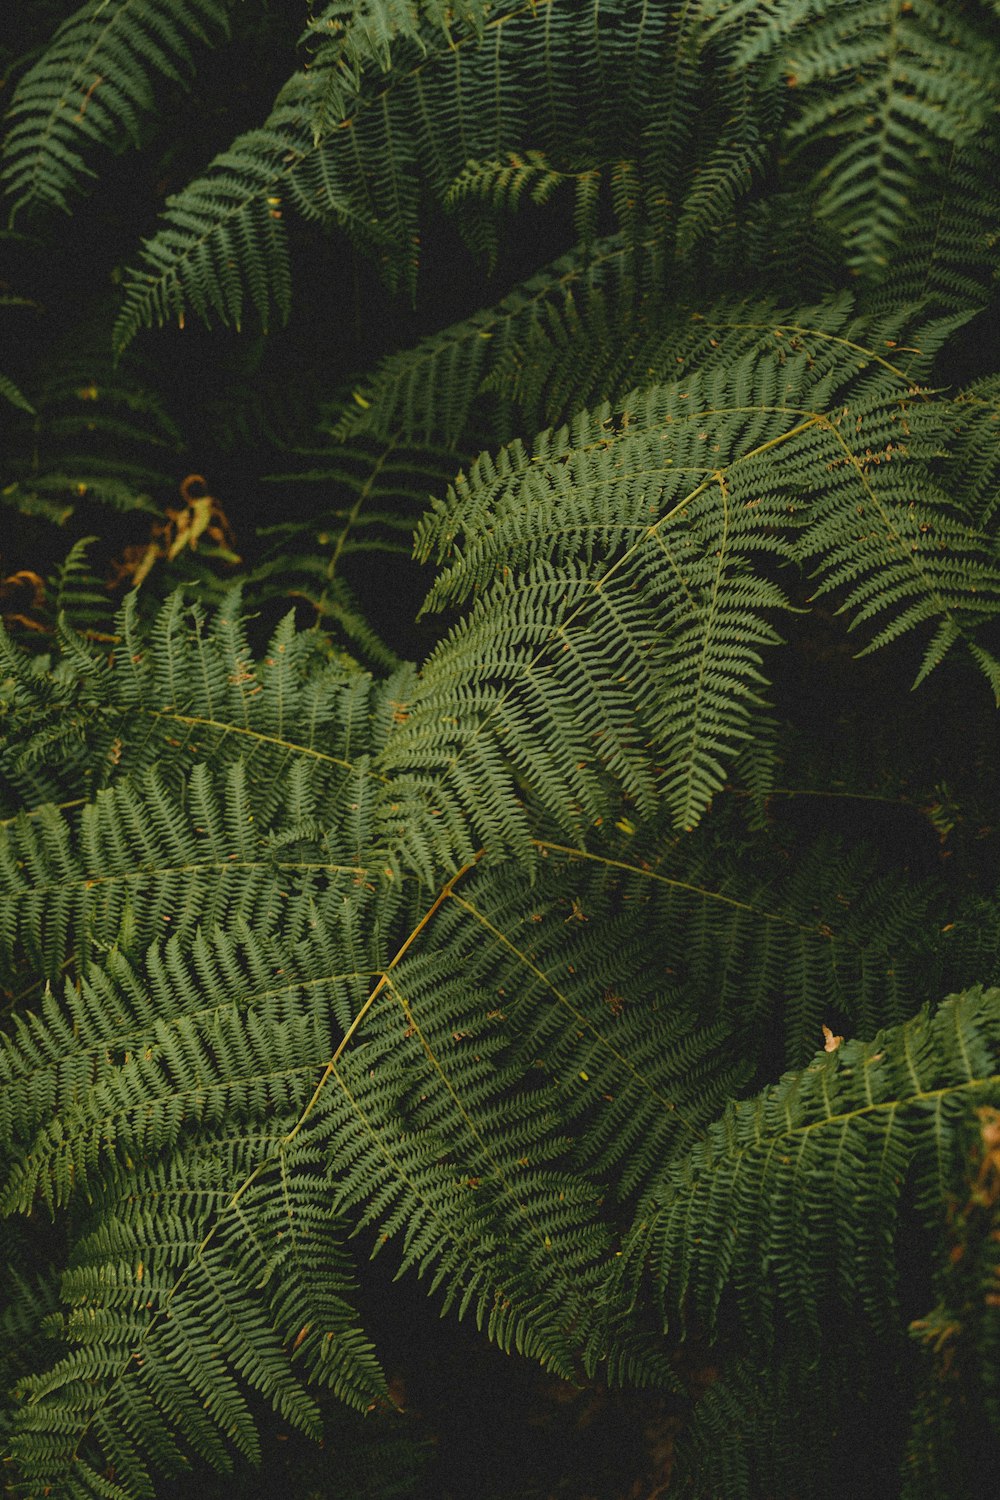 green fern plant during nighttime